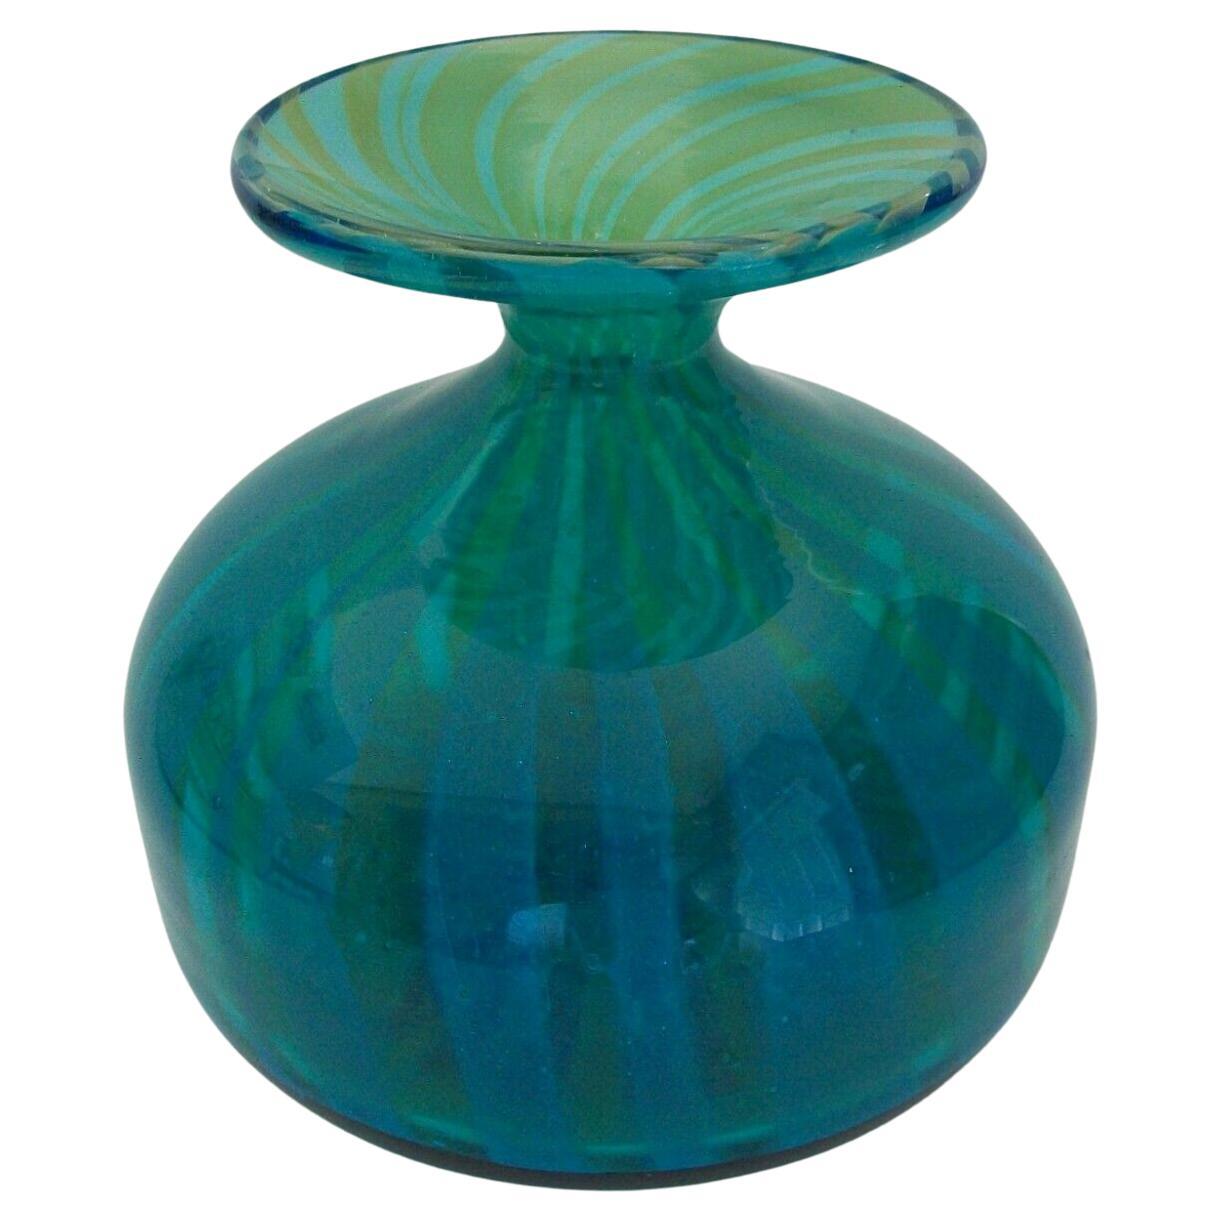 Mdina, 'Ming', Vintage Blue & Green Glass Vase, Malta, Late 20th Century